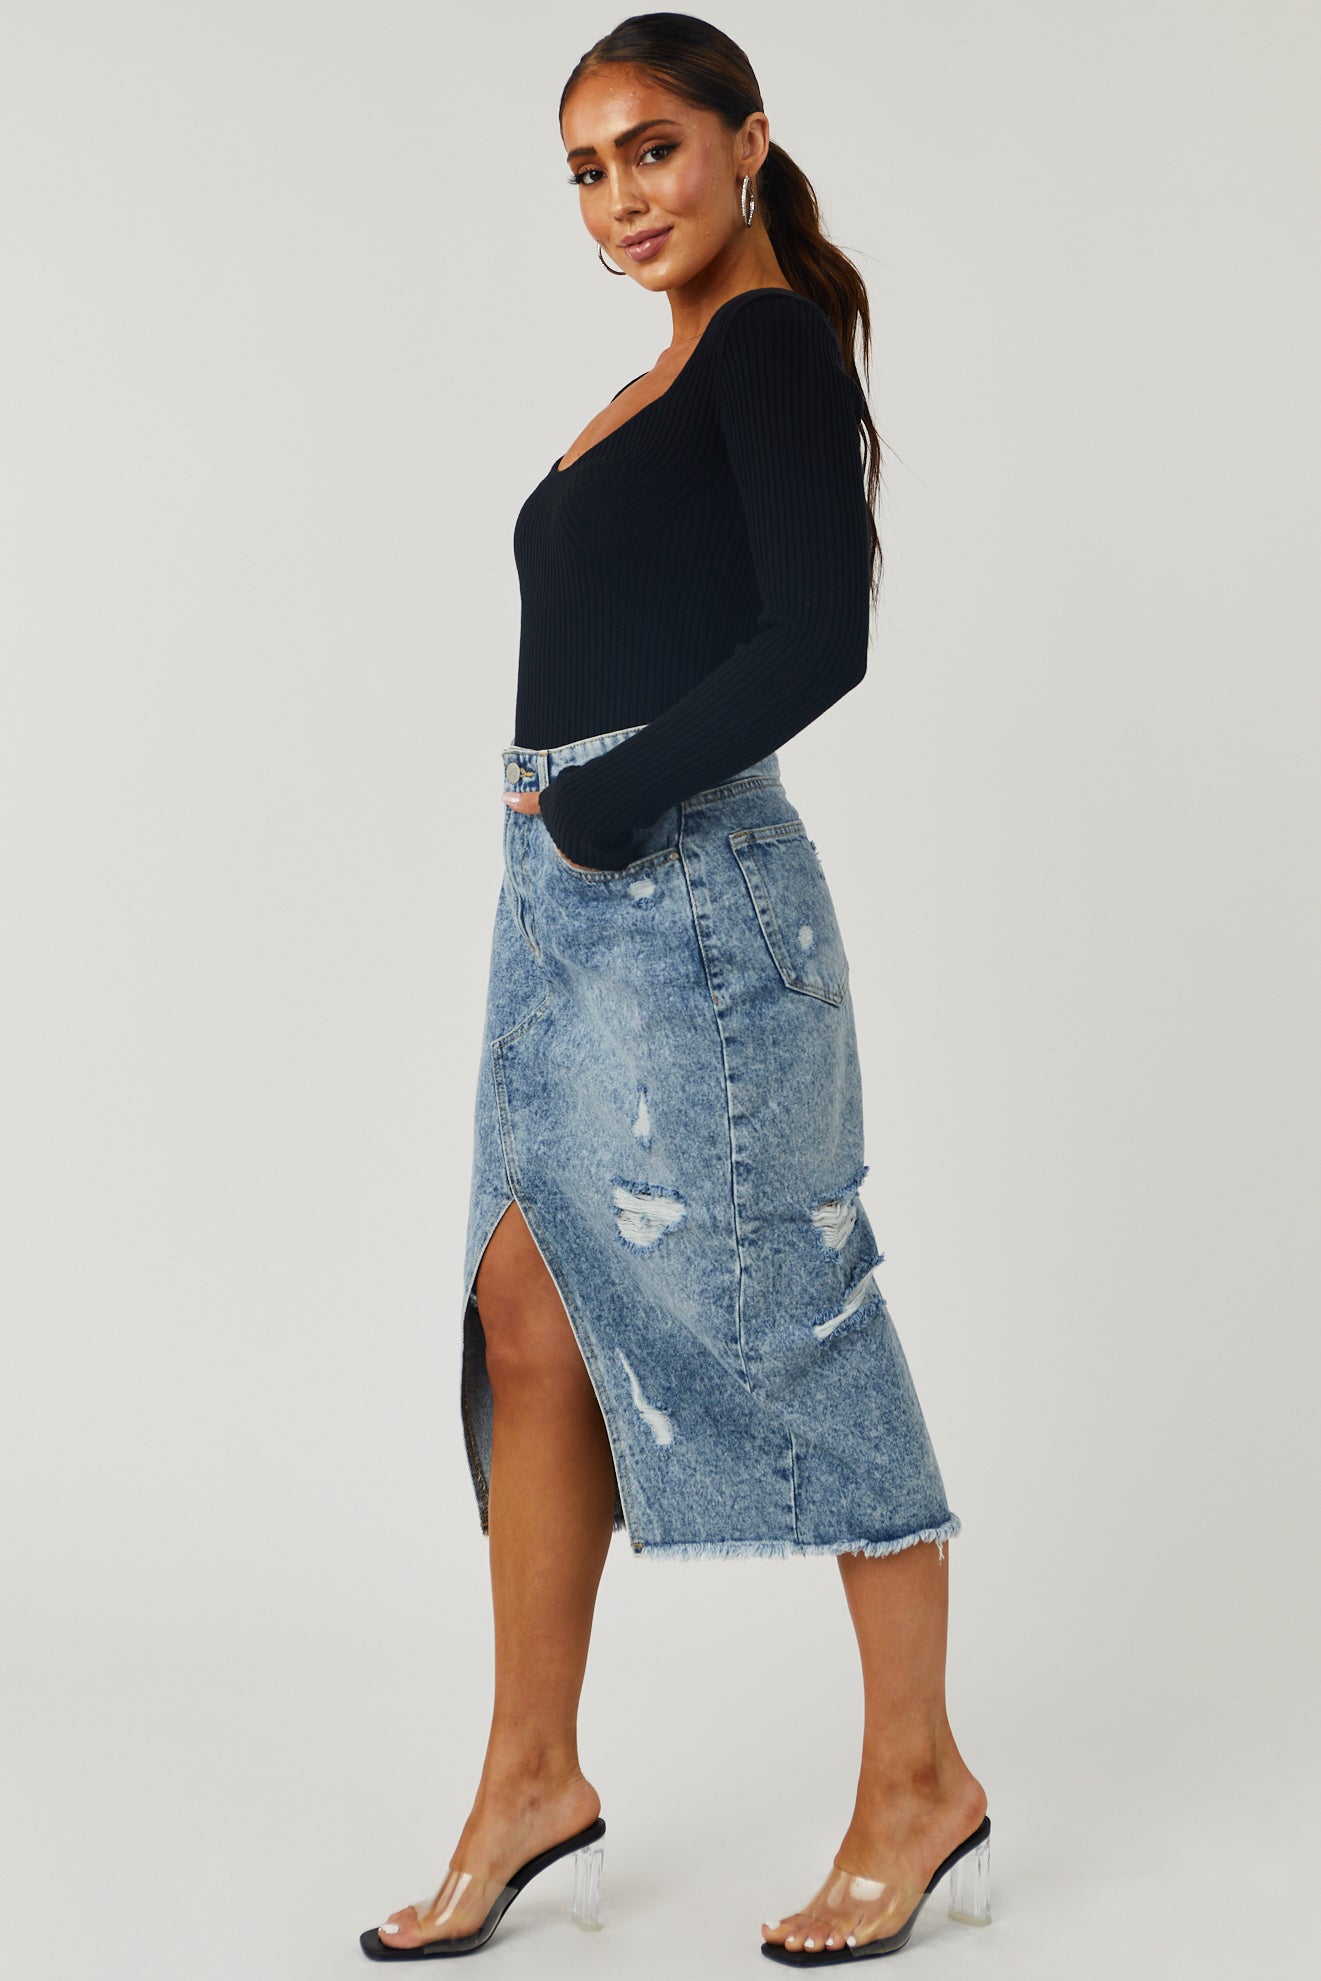 Buy StyleStone Women's Denim Distressed Strip Midi Skirt (Blue, Medium) at  Amazon.in